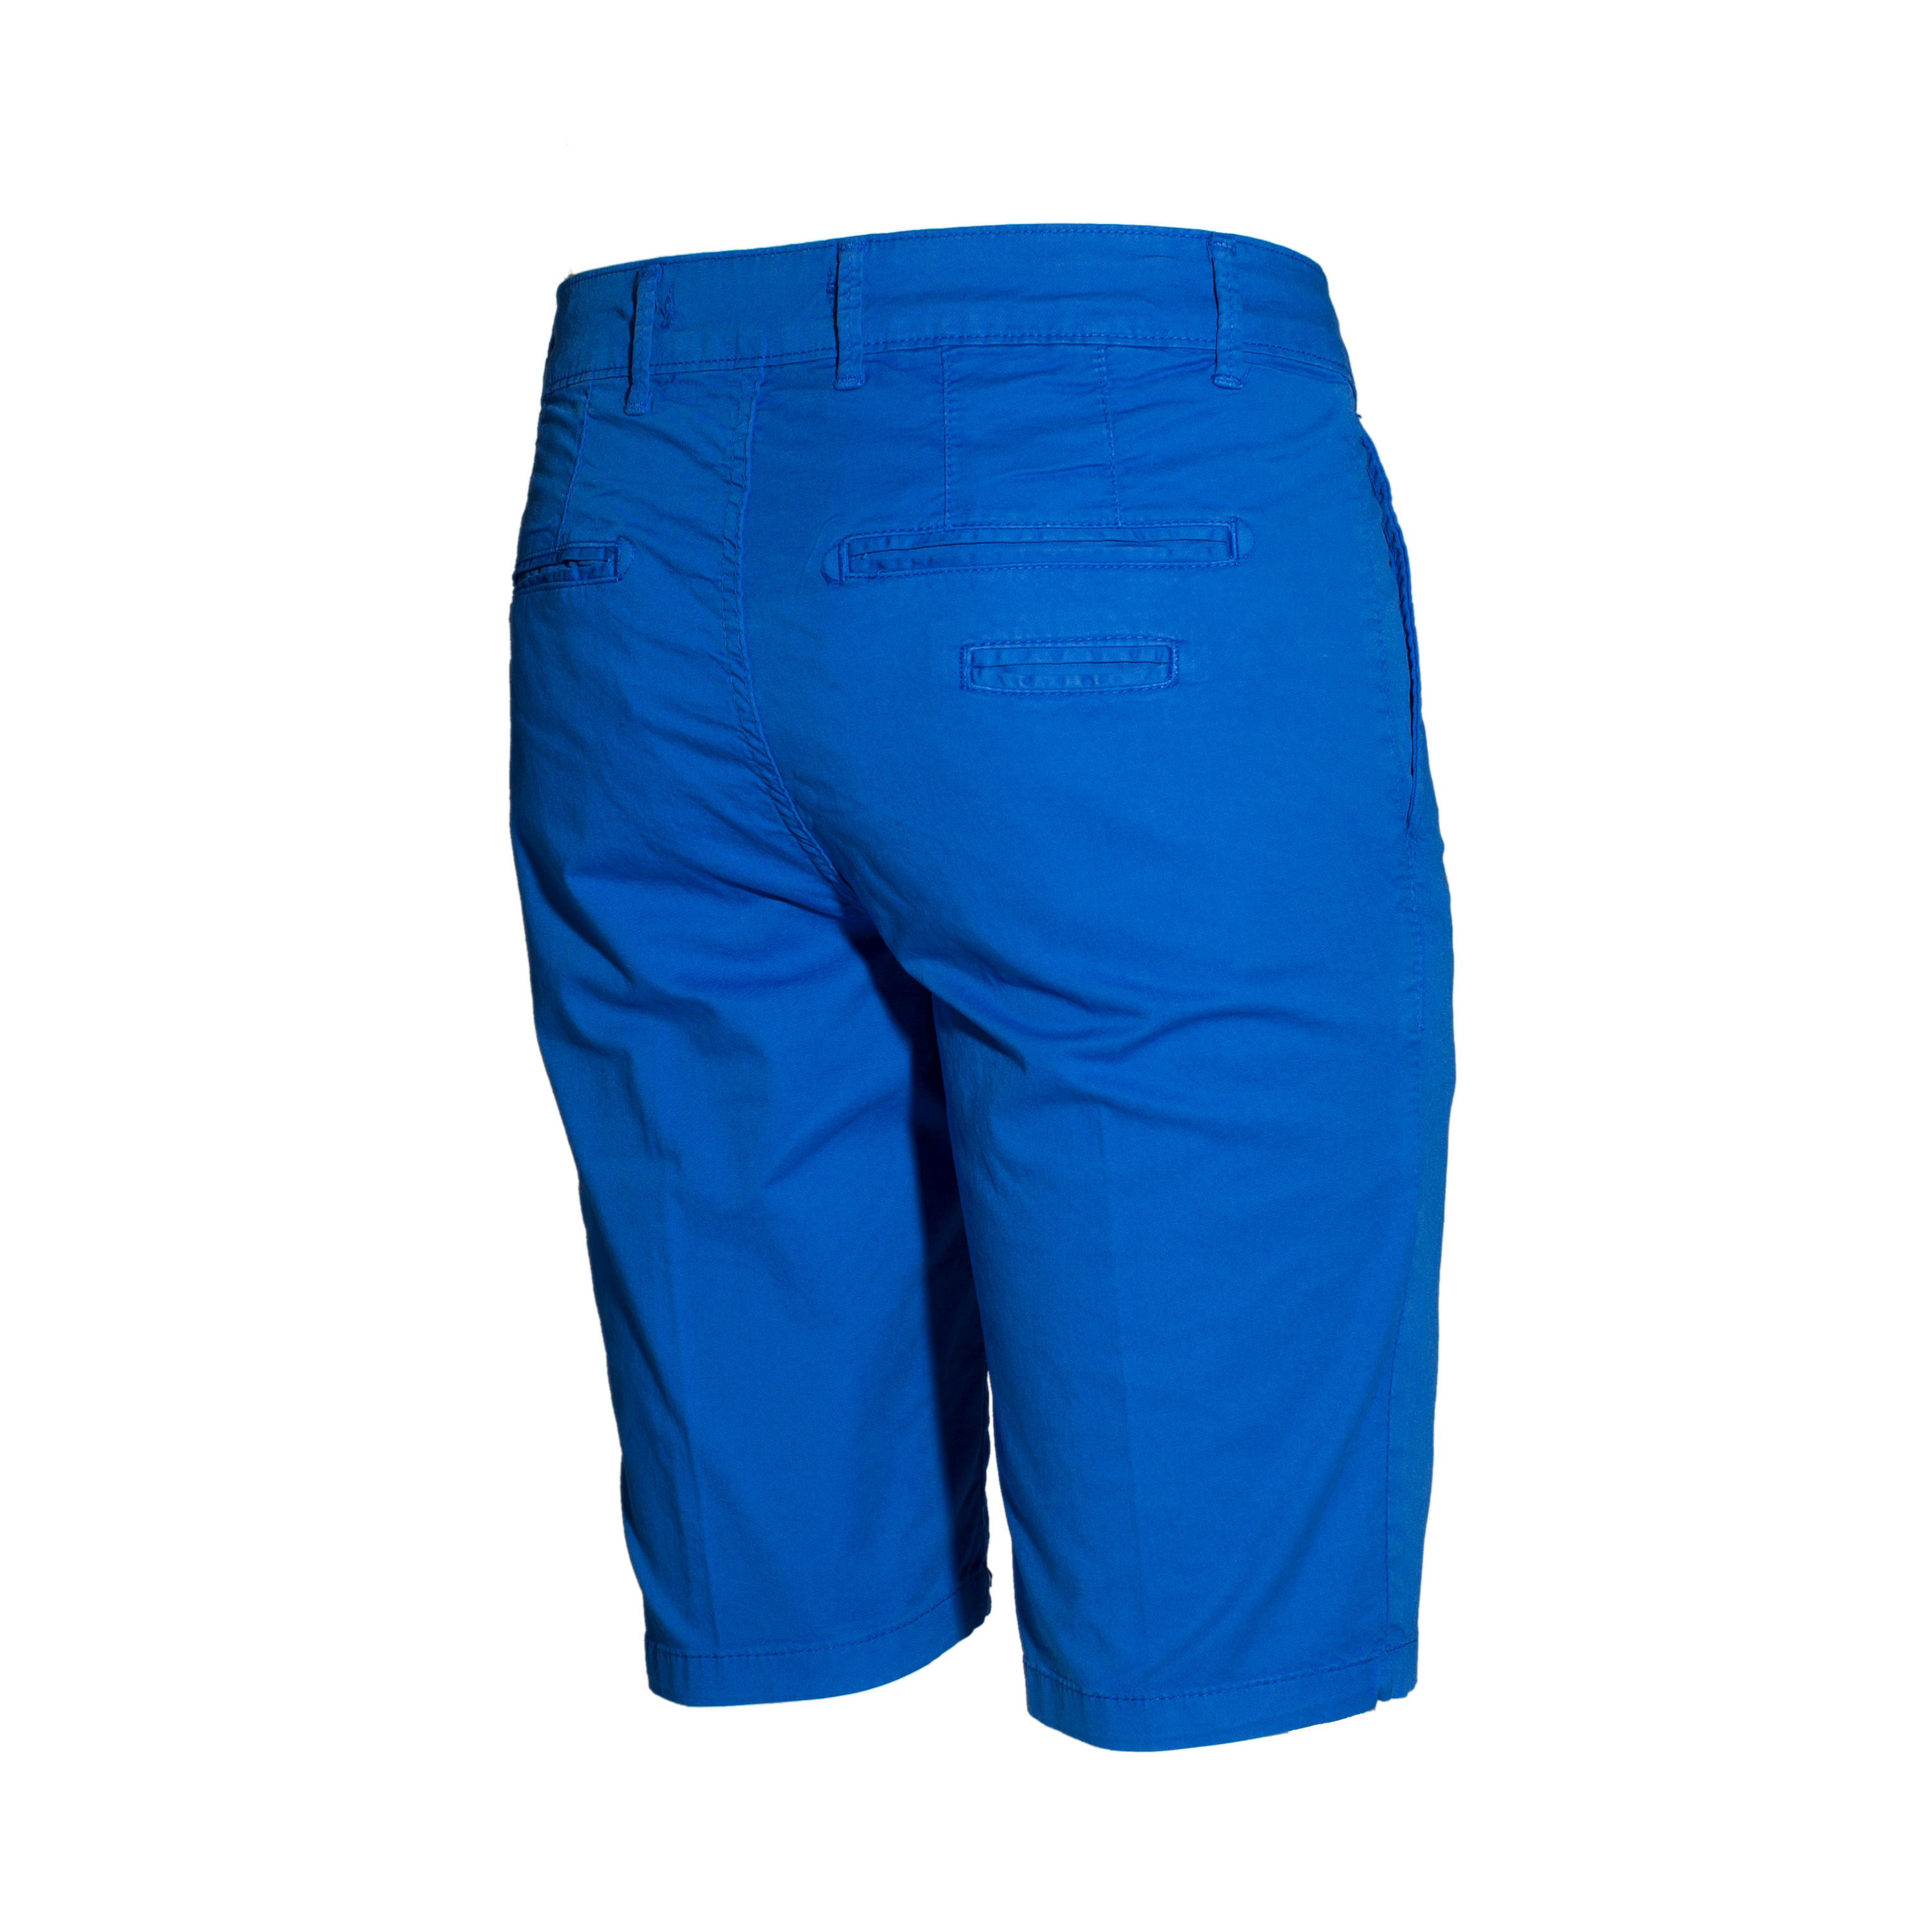 Bermuda Uomo In Cotone Blu Royal Pantaloncini tinta unita